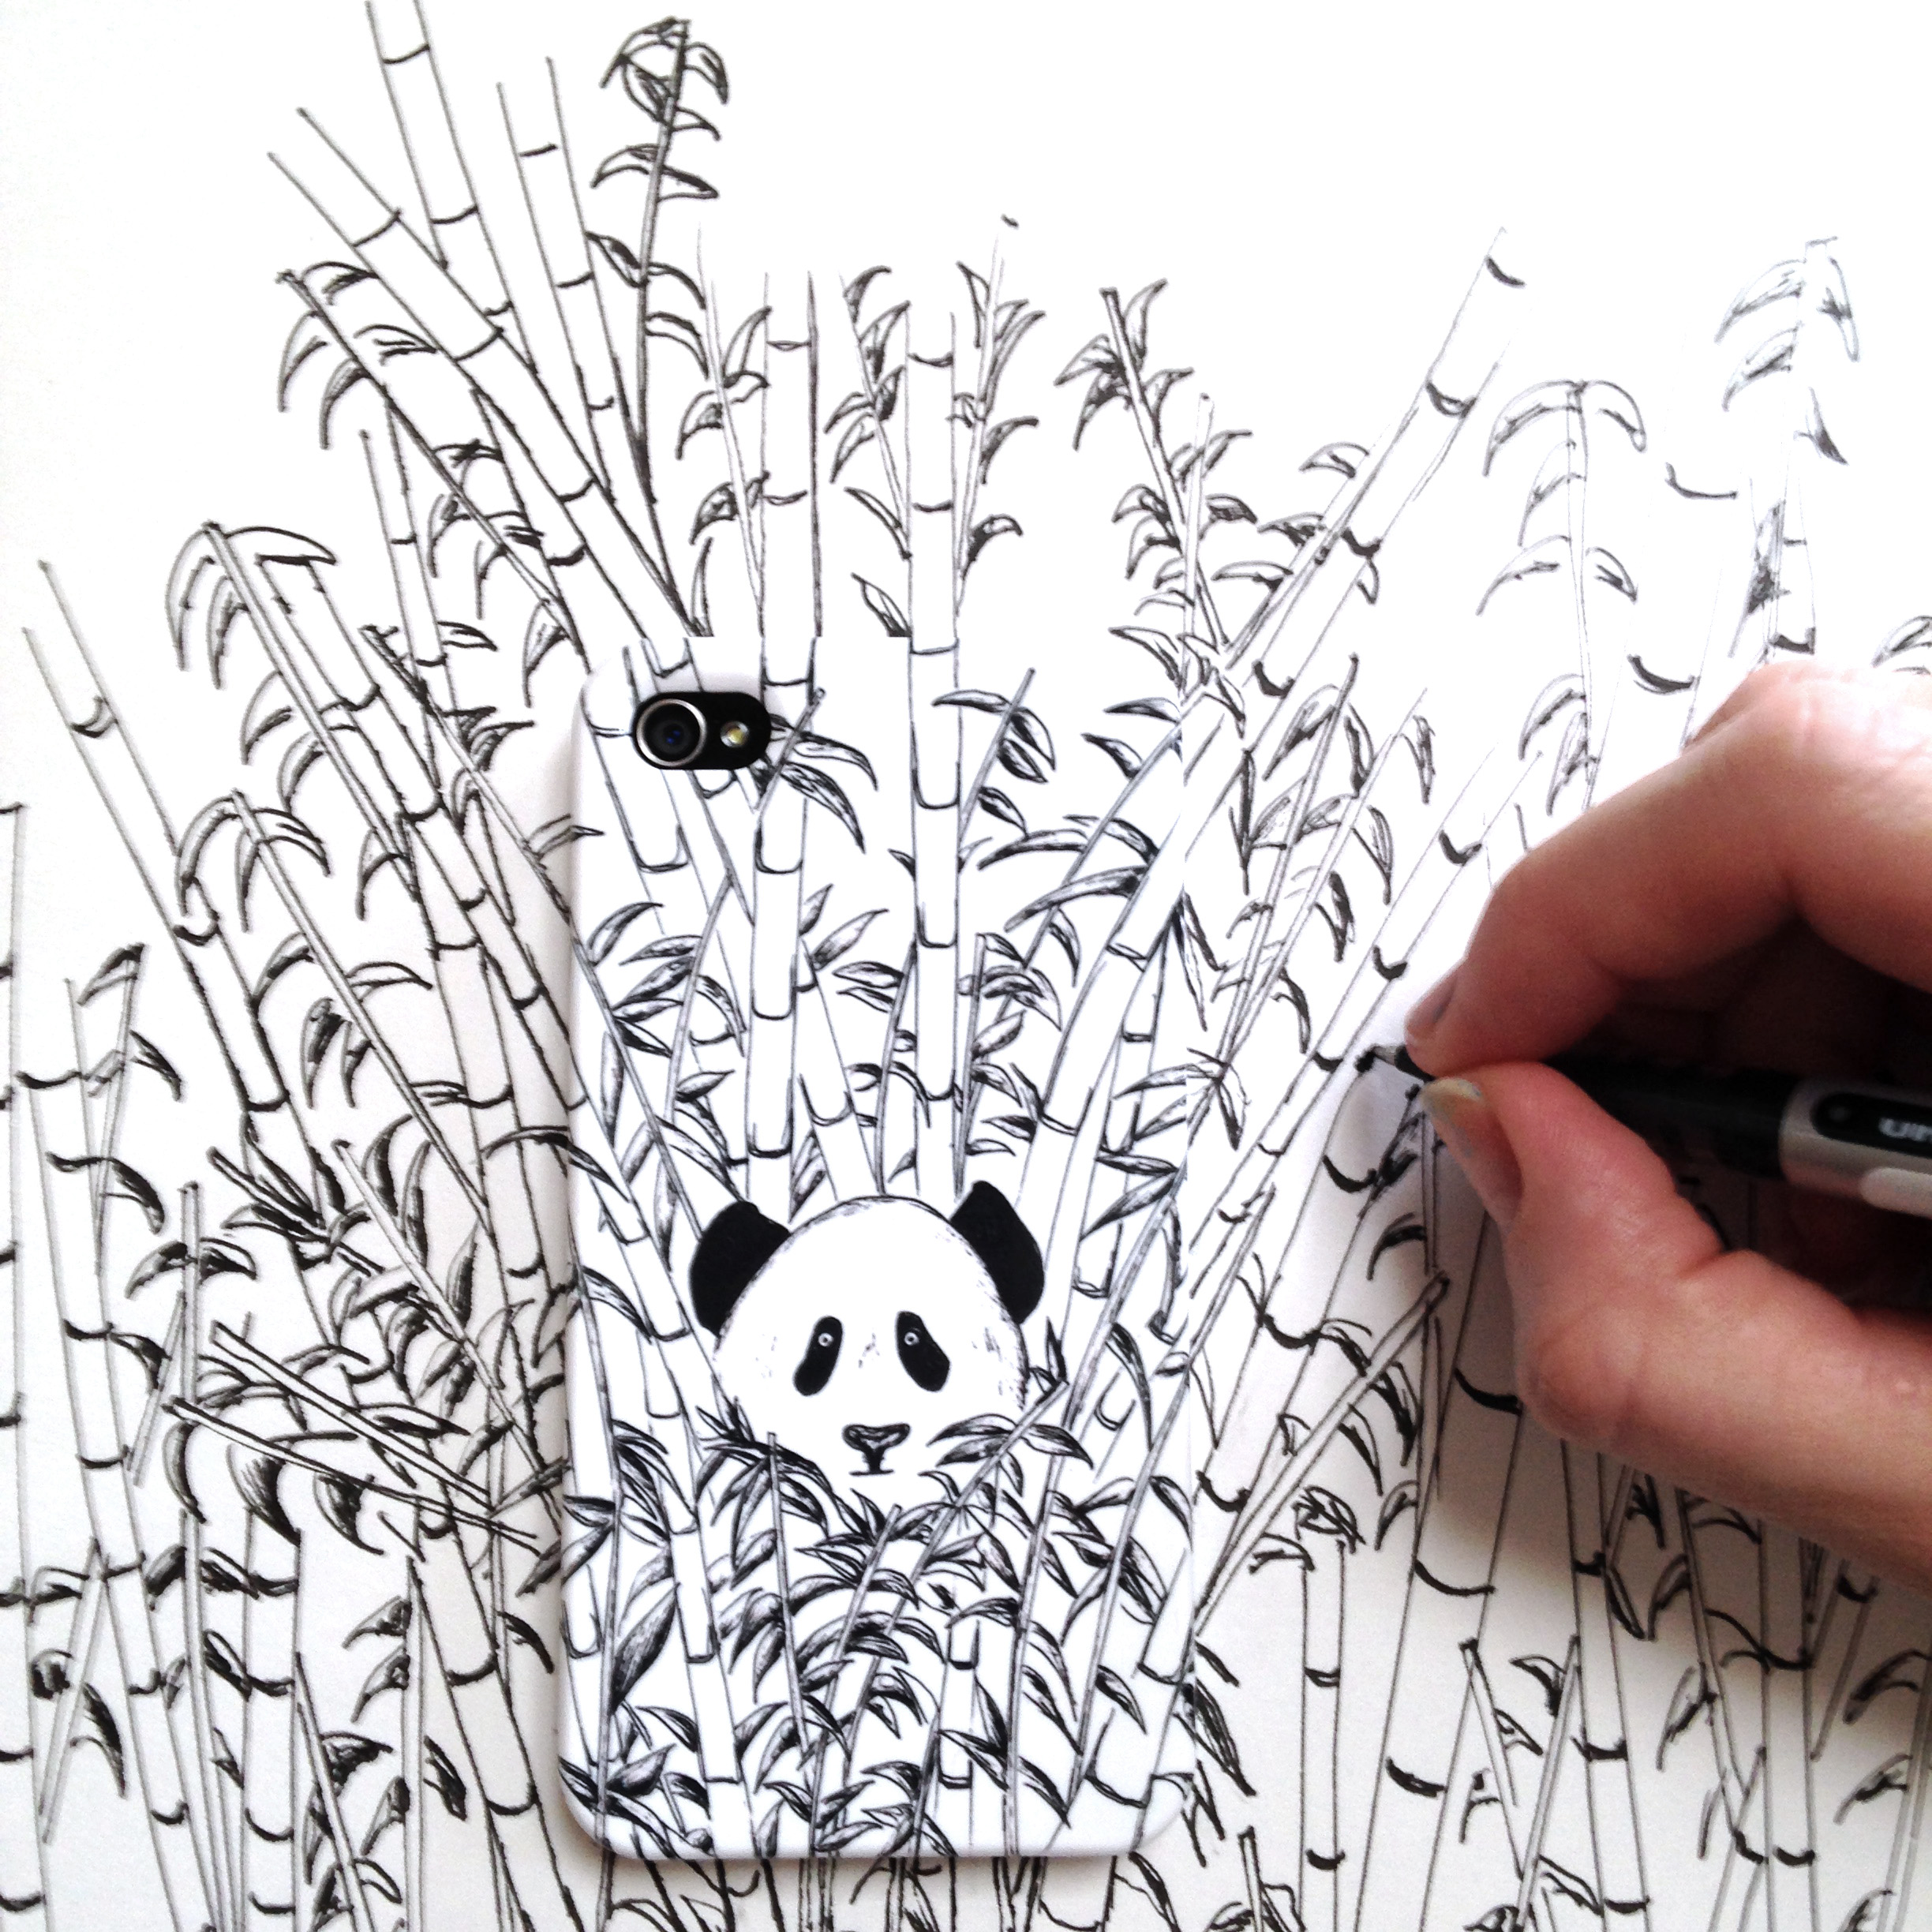 Panda - Dots drawing by Prabhjeet123 on DeviantArt